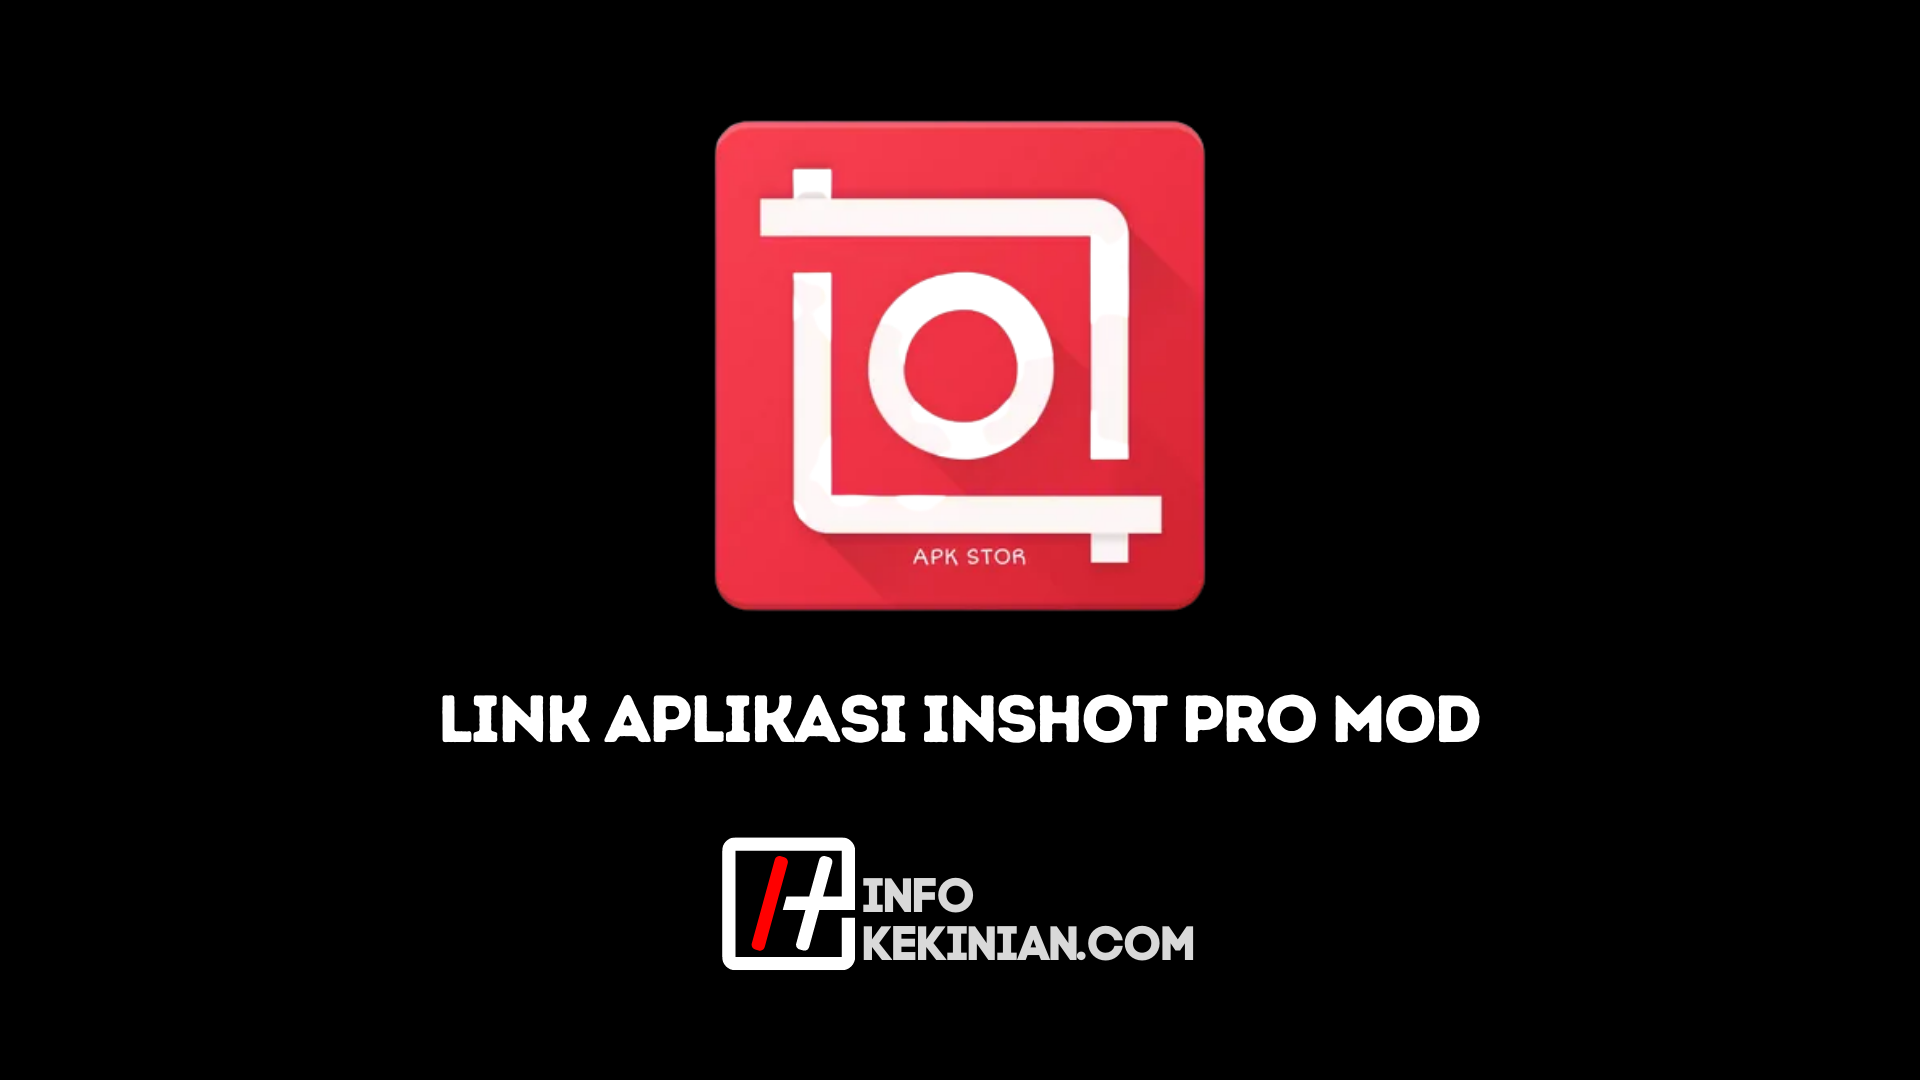 What is Inshot Pro Mod APK_